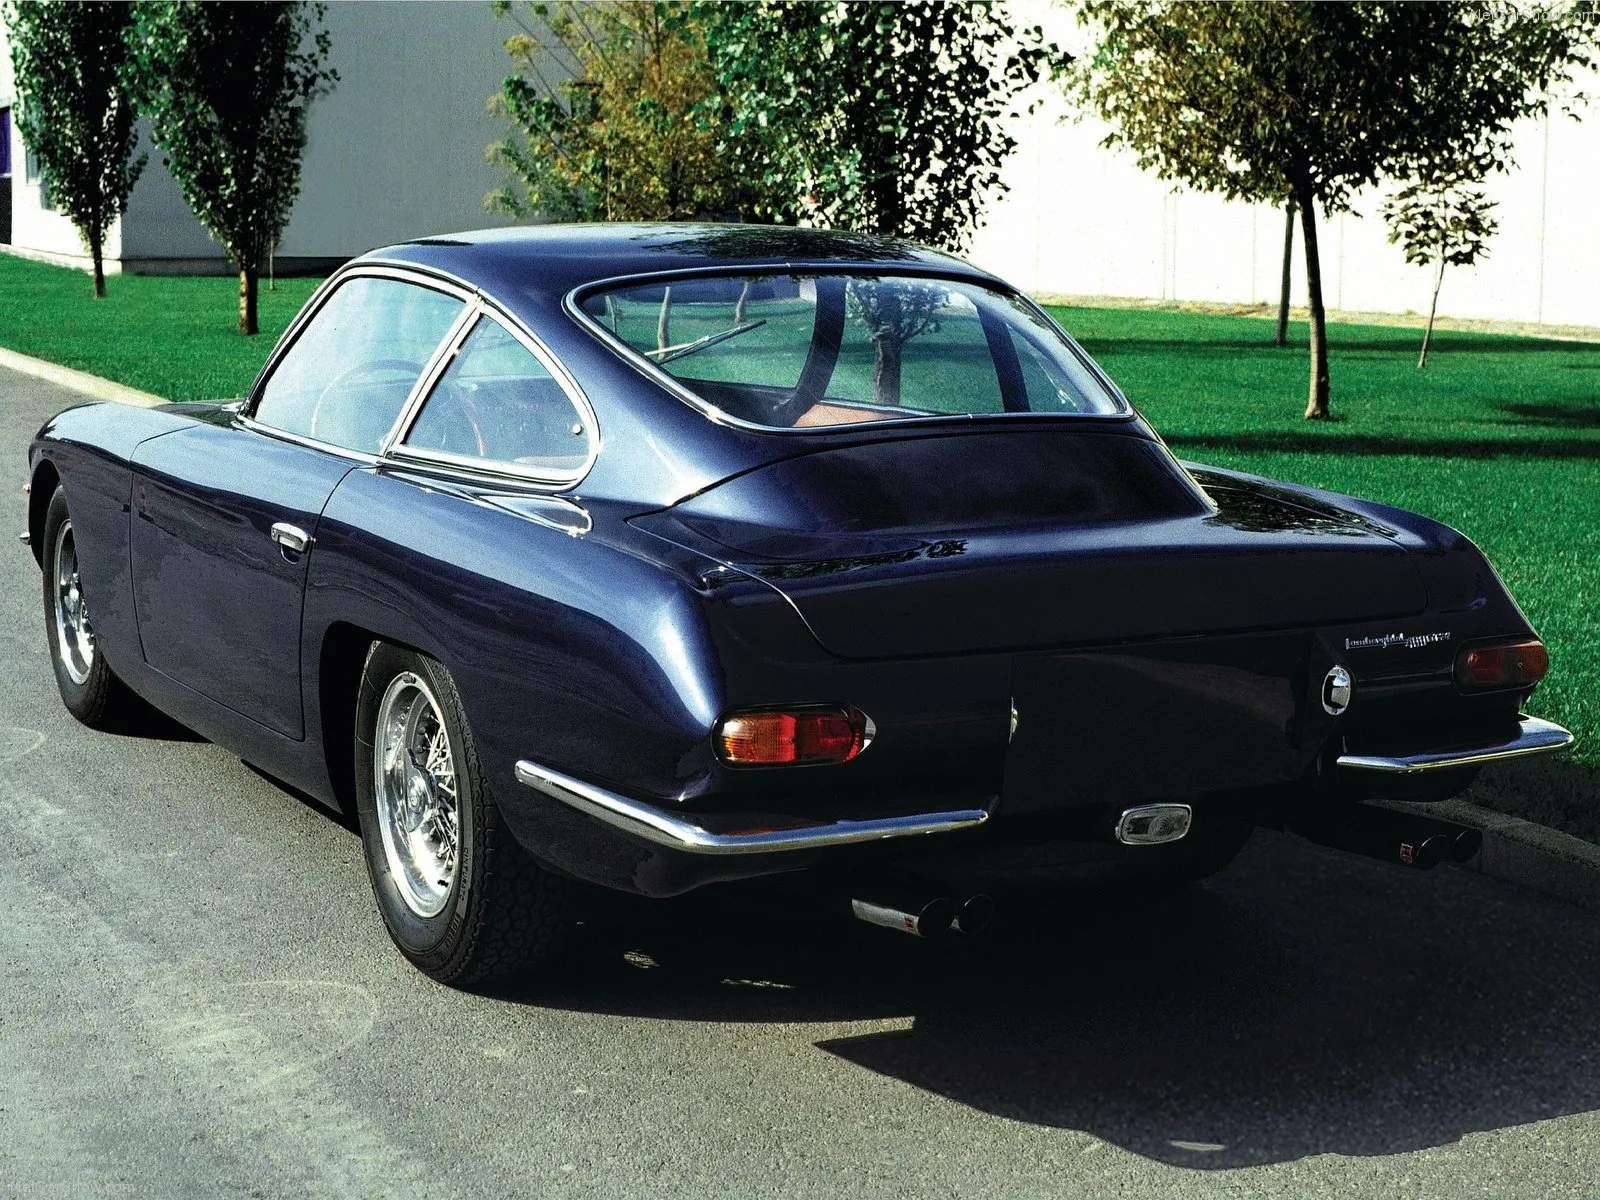 Hình ảnh siêu xe Lamborghini 400 GT 1966 & nội ngoại thất